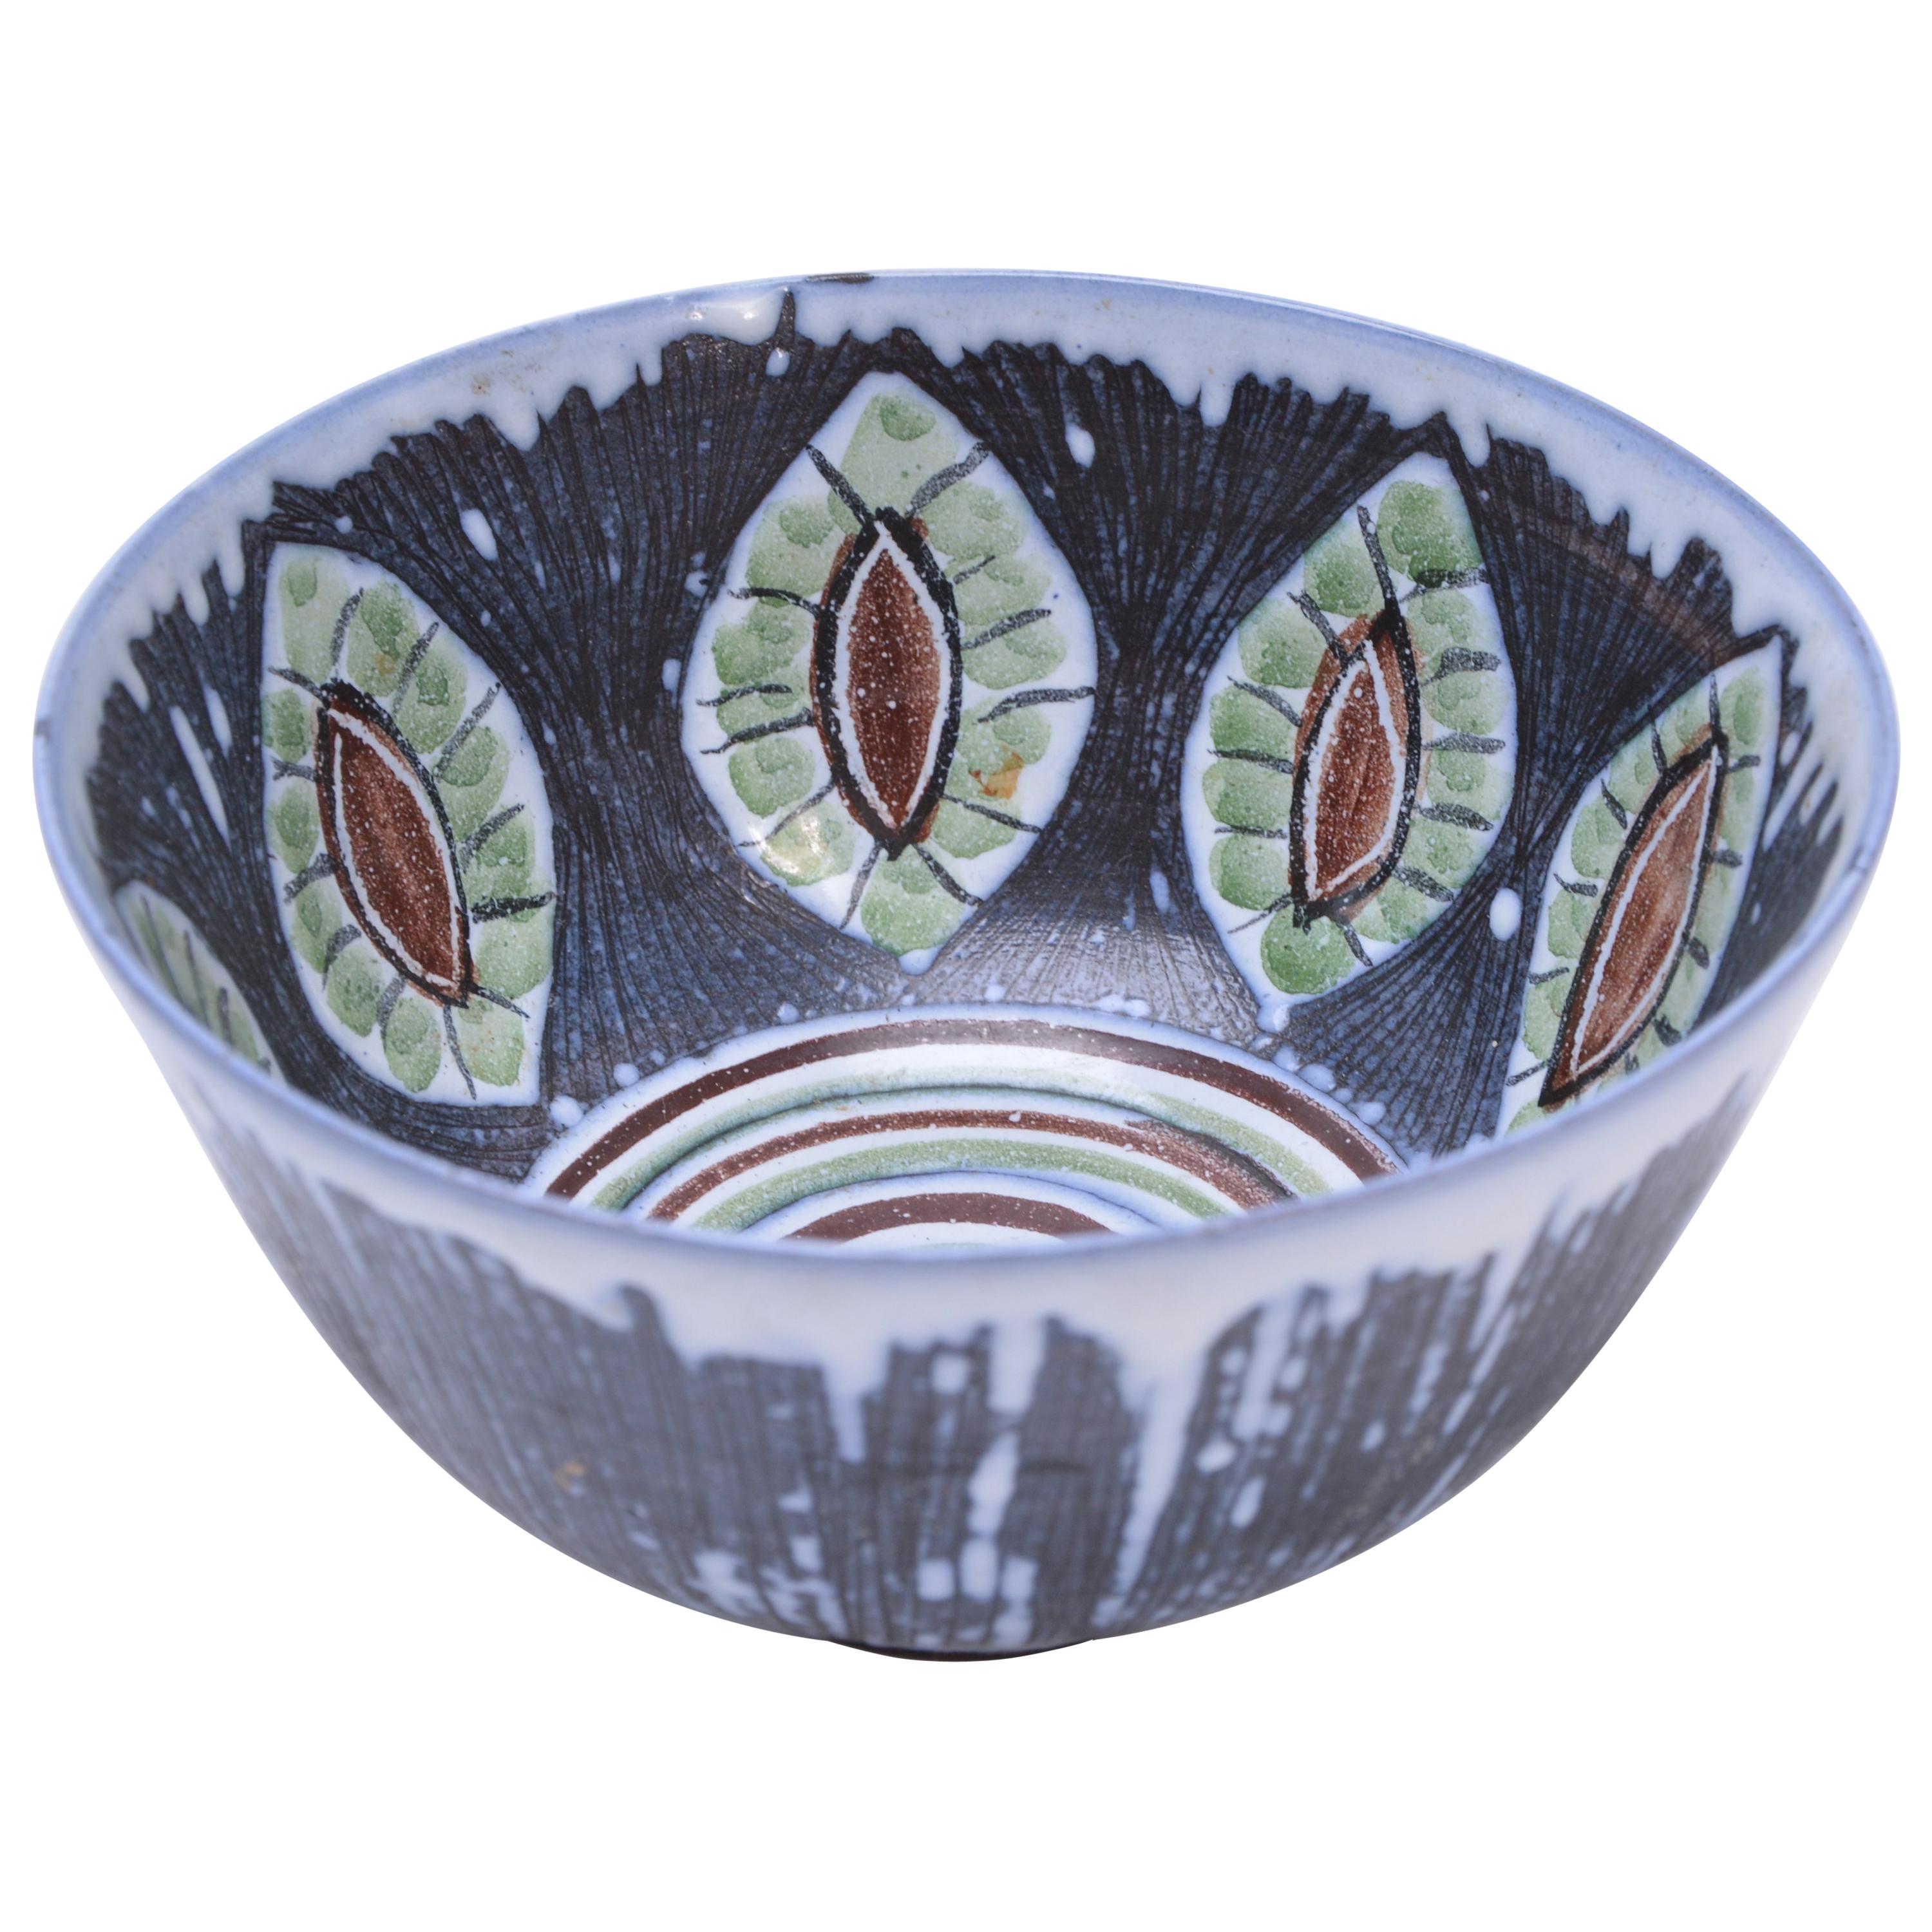 Handmade Swedish Ceramic Bowl by Alingsås Ceramic, 1960s